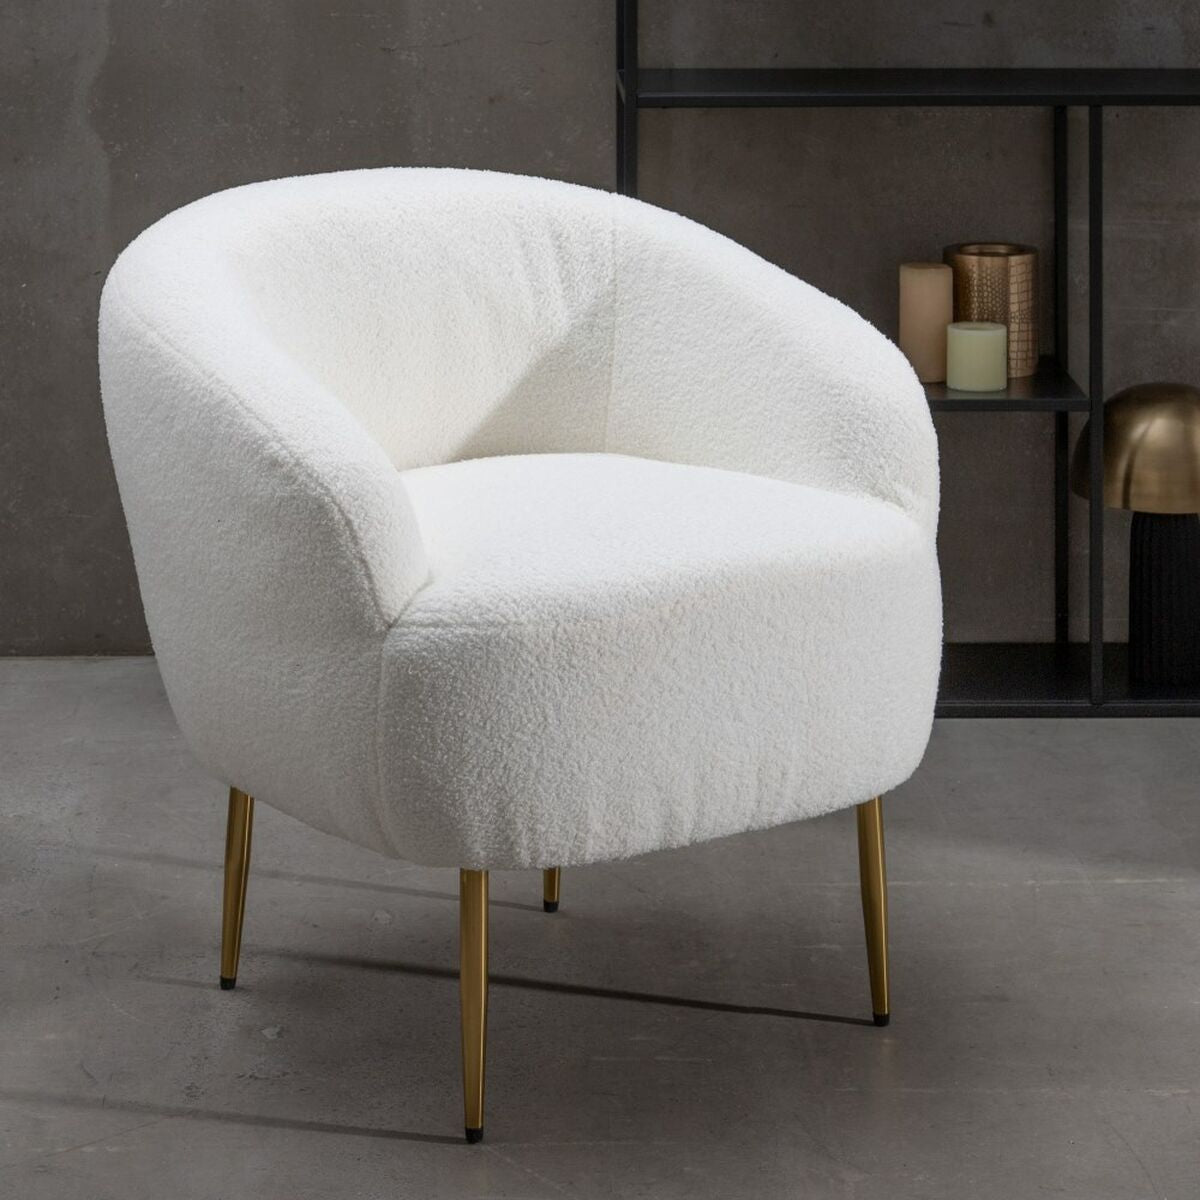 White Armchair with Golden Metal Legs (75 x 70 x 74 cm)